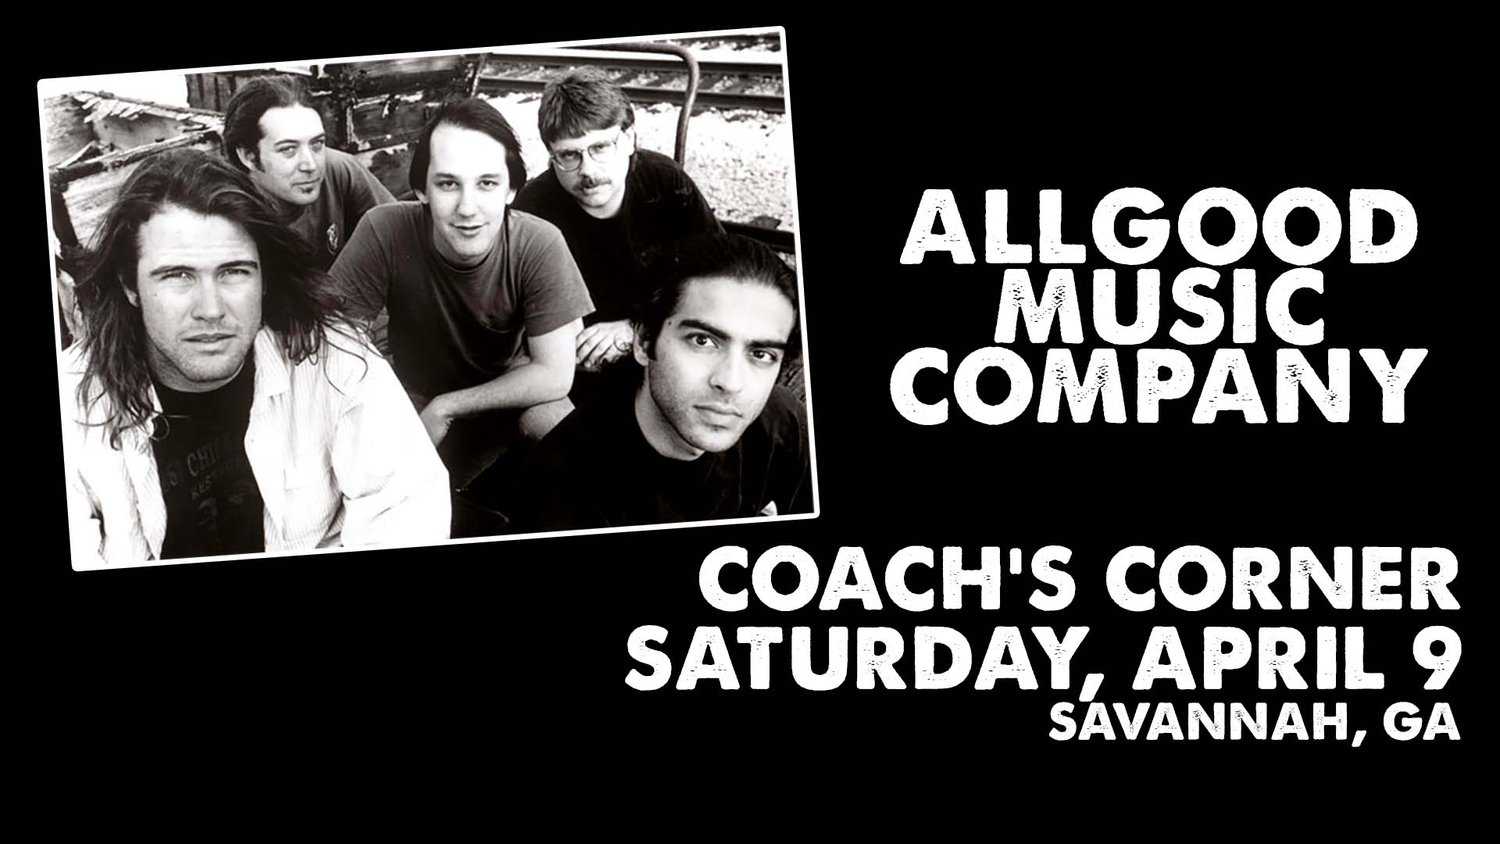 Allgood Music Company